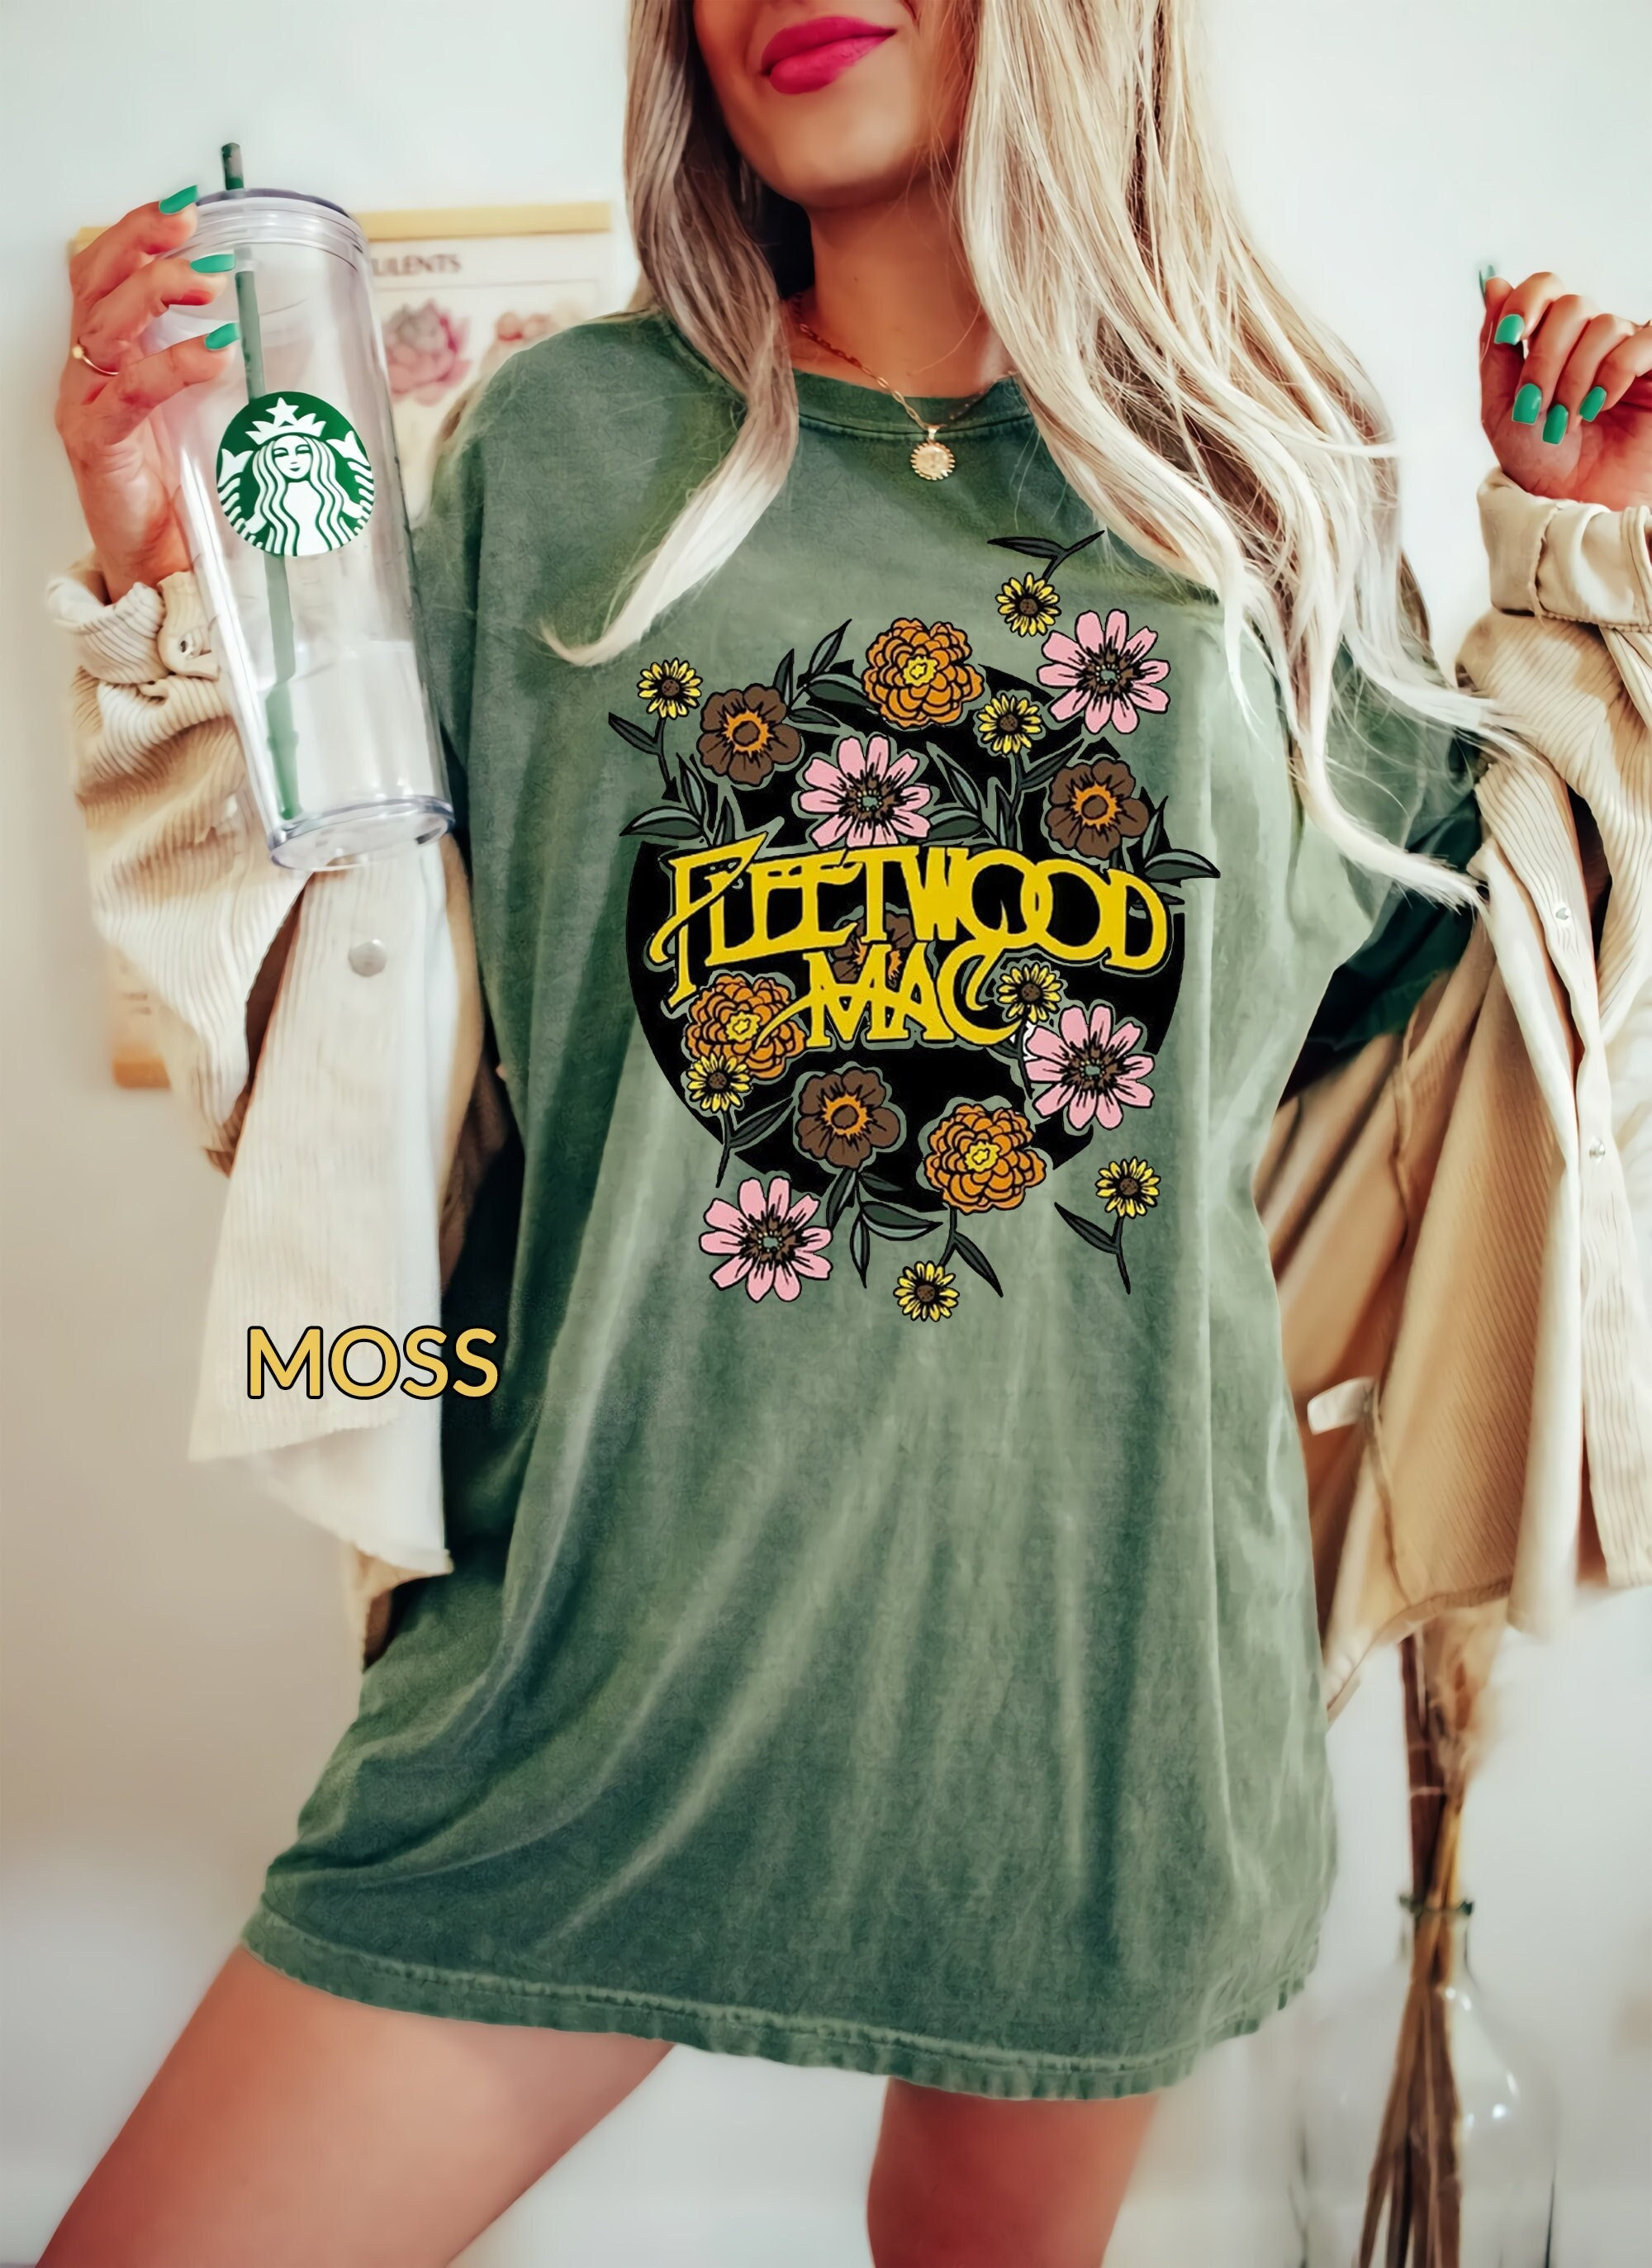 Discover Fleetwood Mac T-shirt, Band Tee, Fleetwood Mac shirt